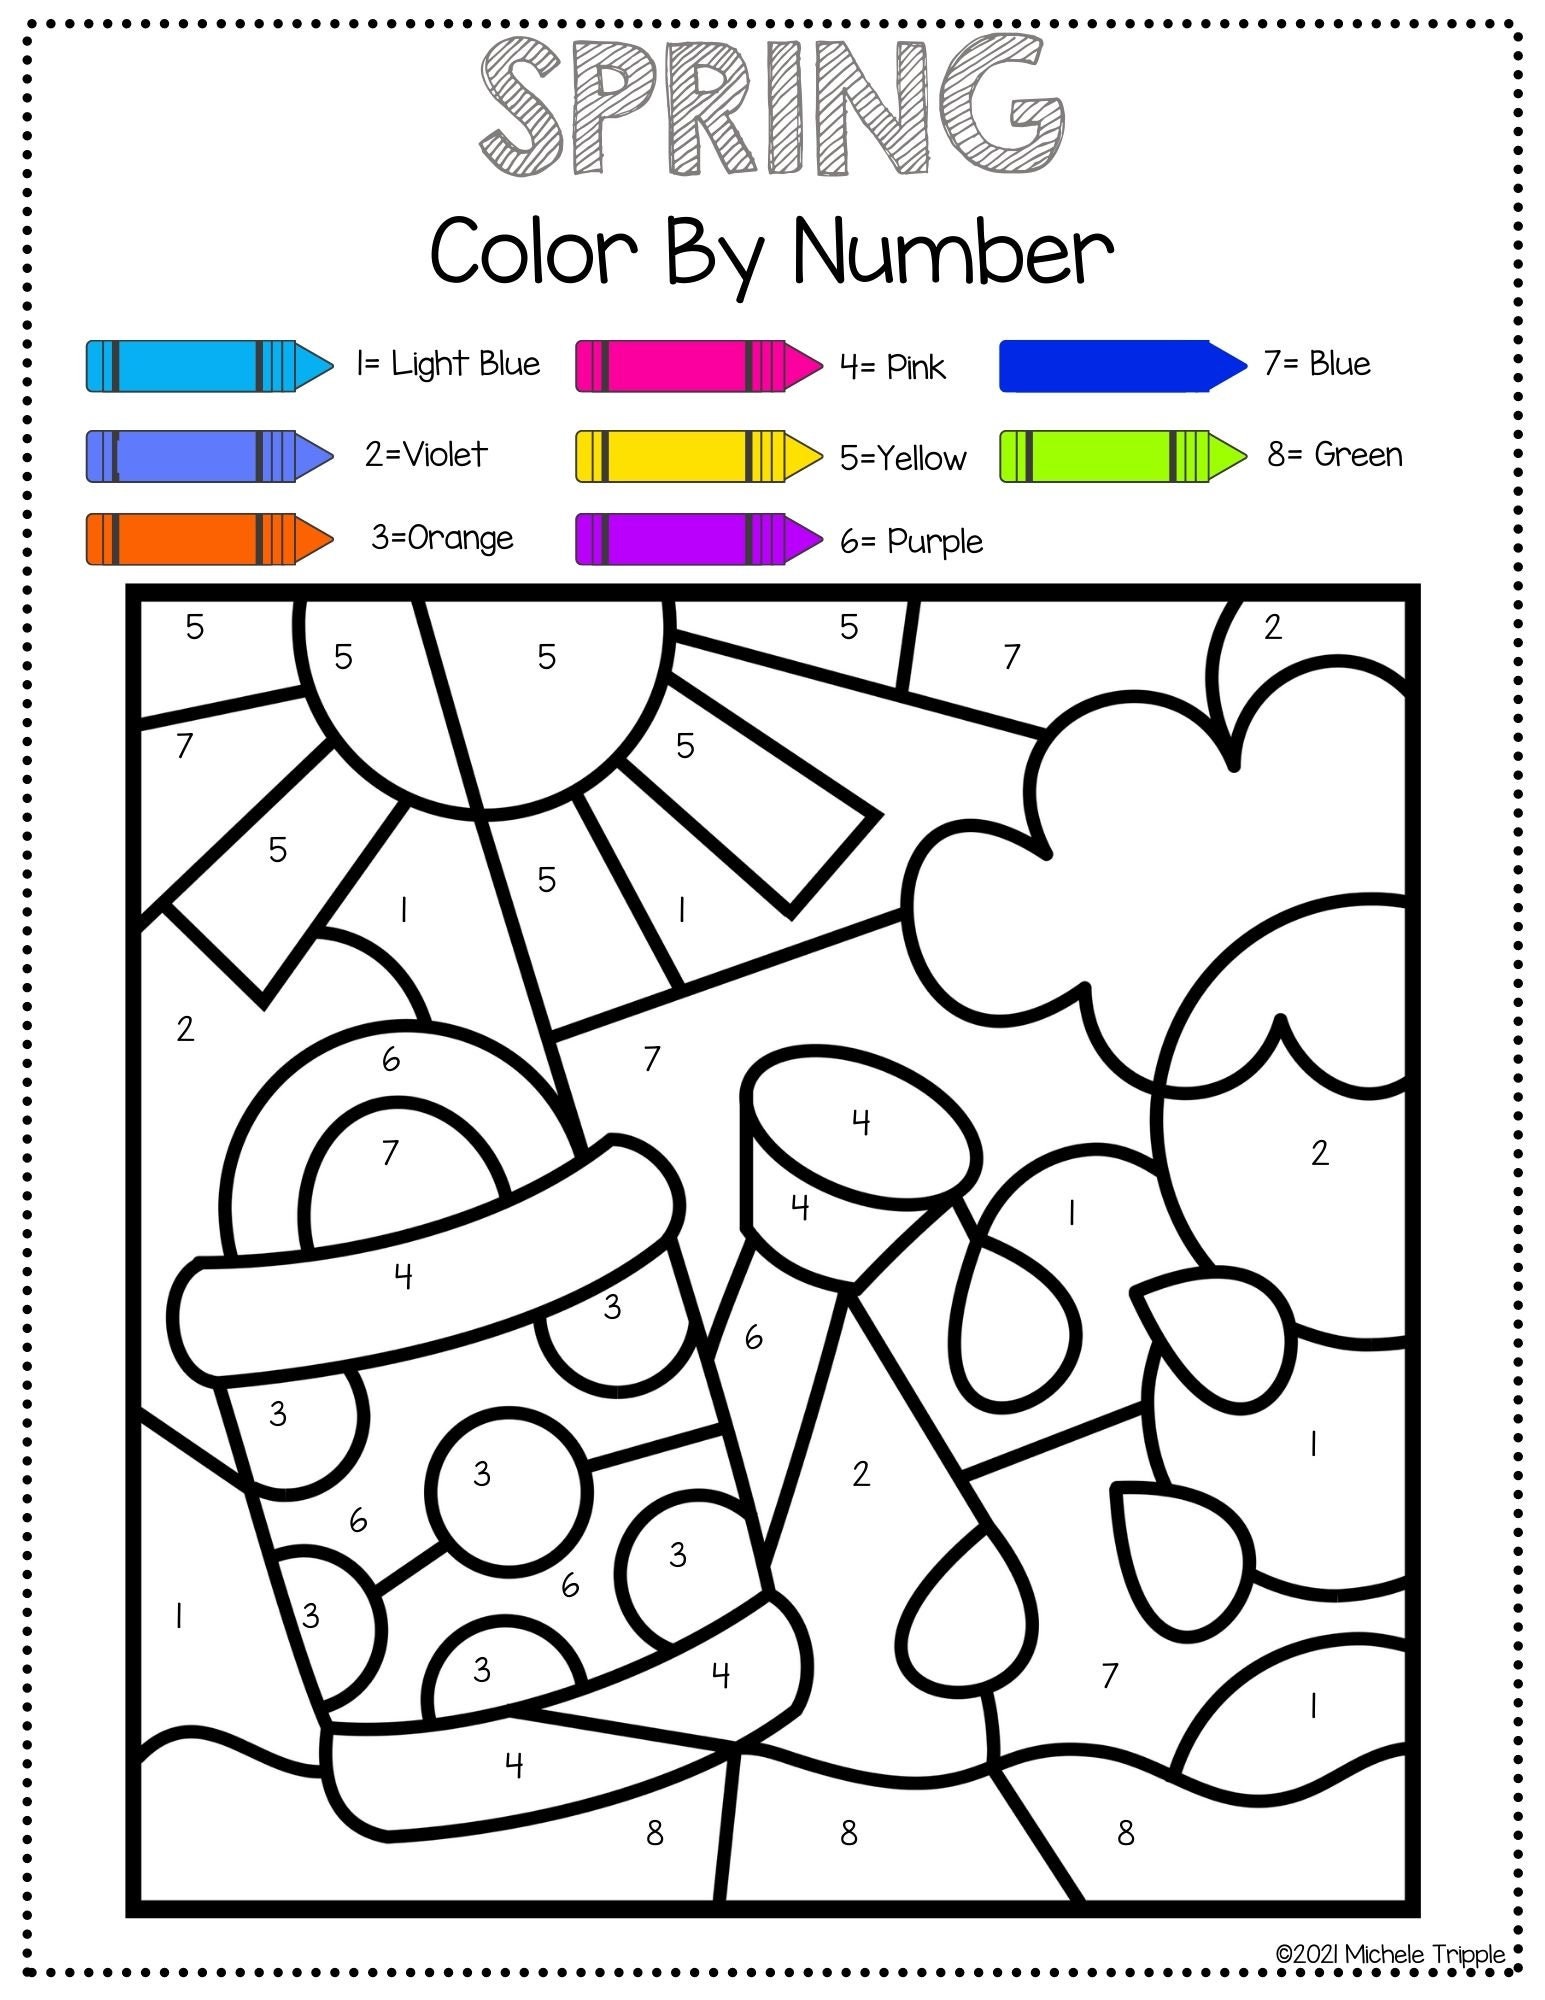 Spring color by number color by number activity for kids coloring guide for kids fun activity instant download